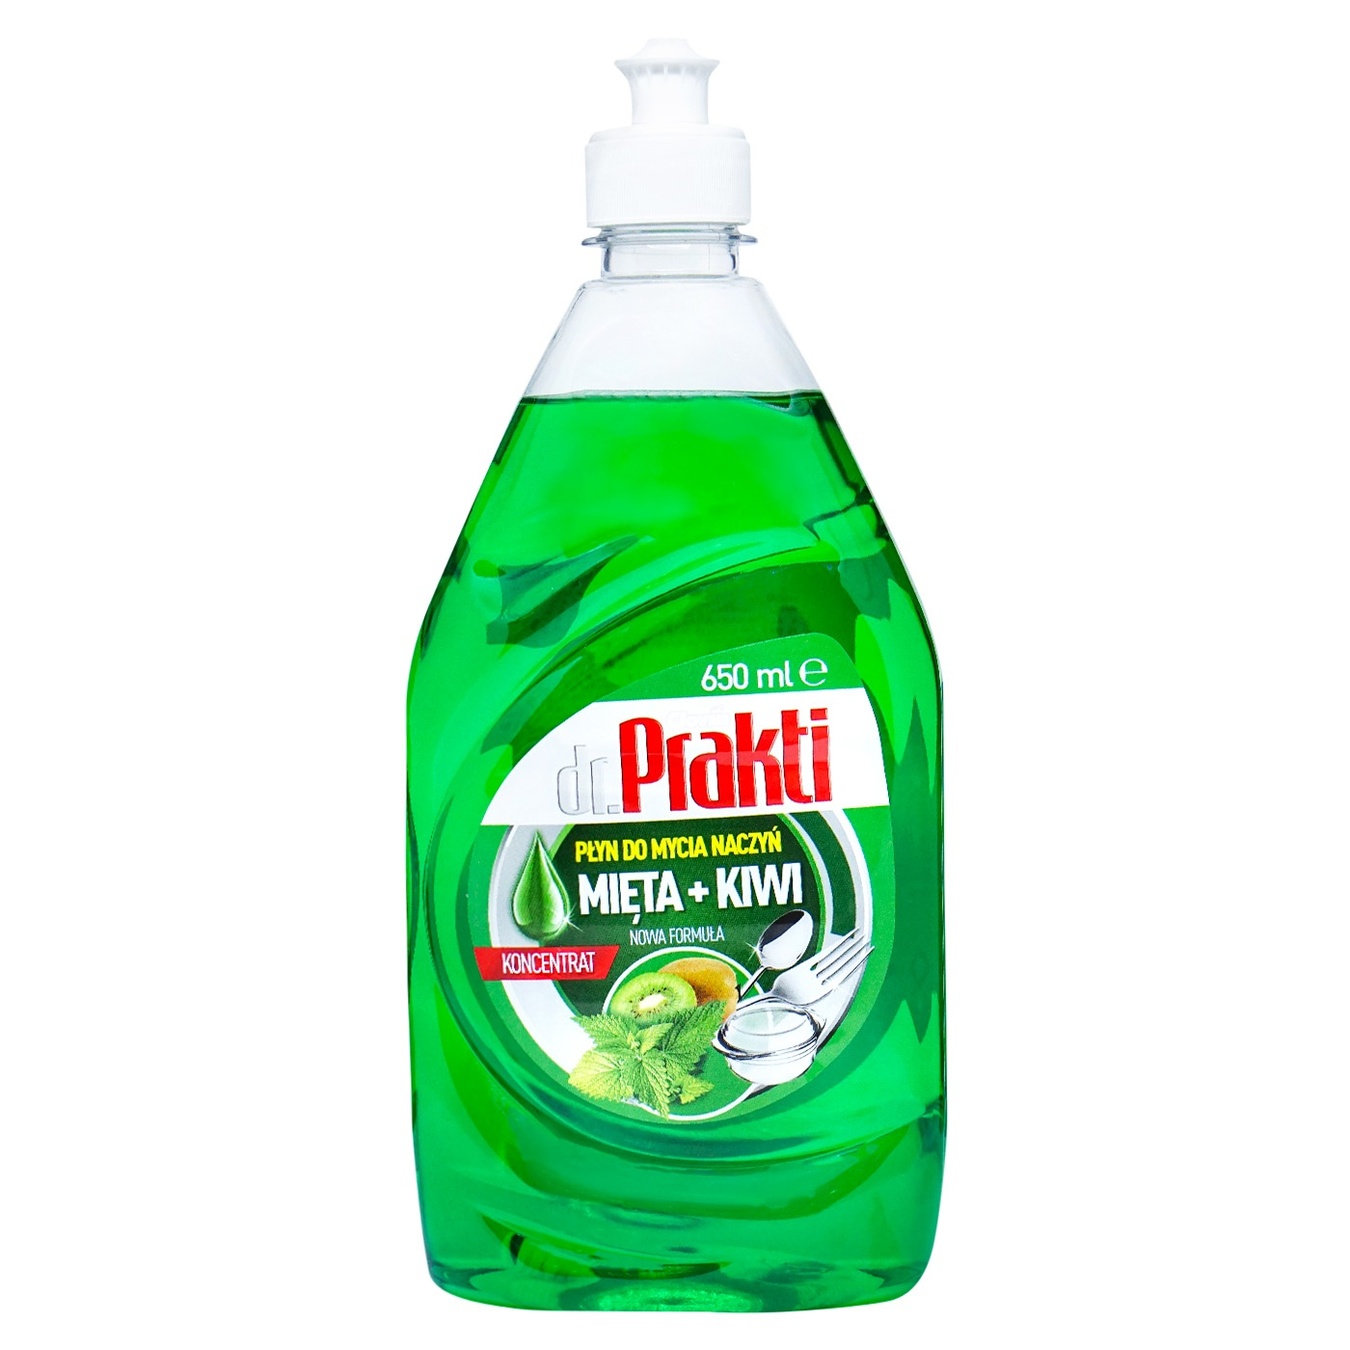 Detergent for washing dishes Dr. Prakti Mint and kiwi 650 ml